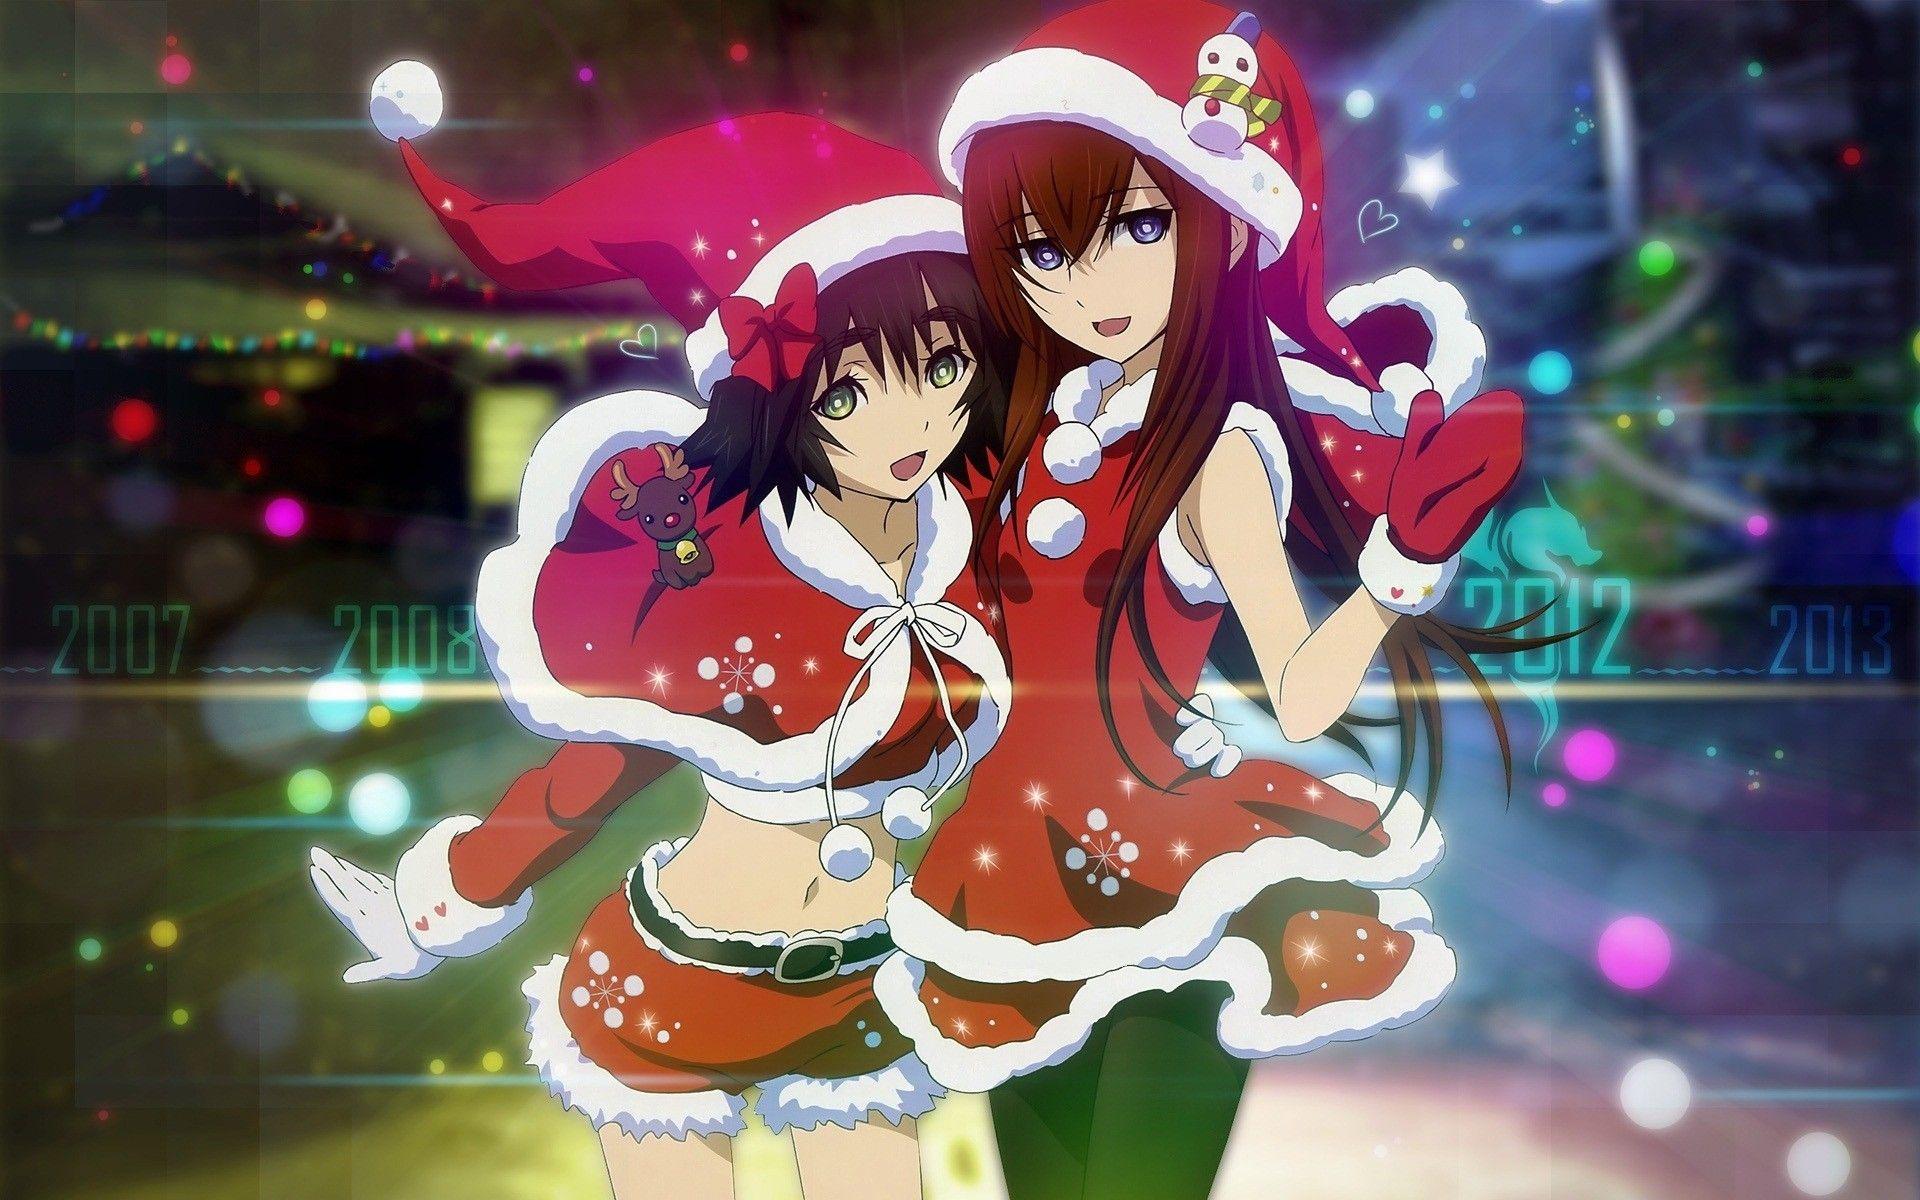 Cute Anime Girl Christmas wallpaper HD. wallpaper.wiki